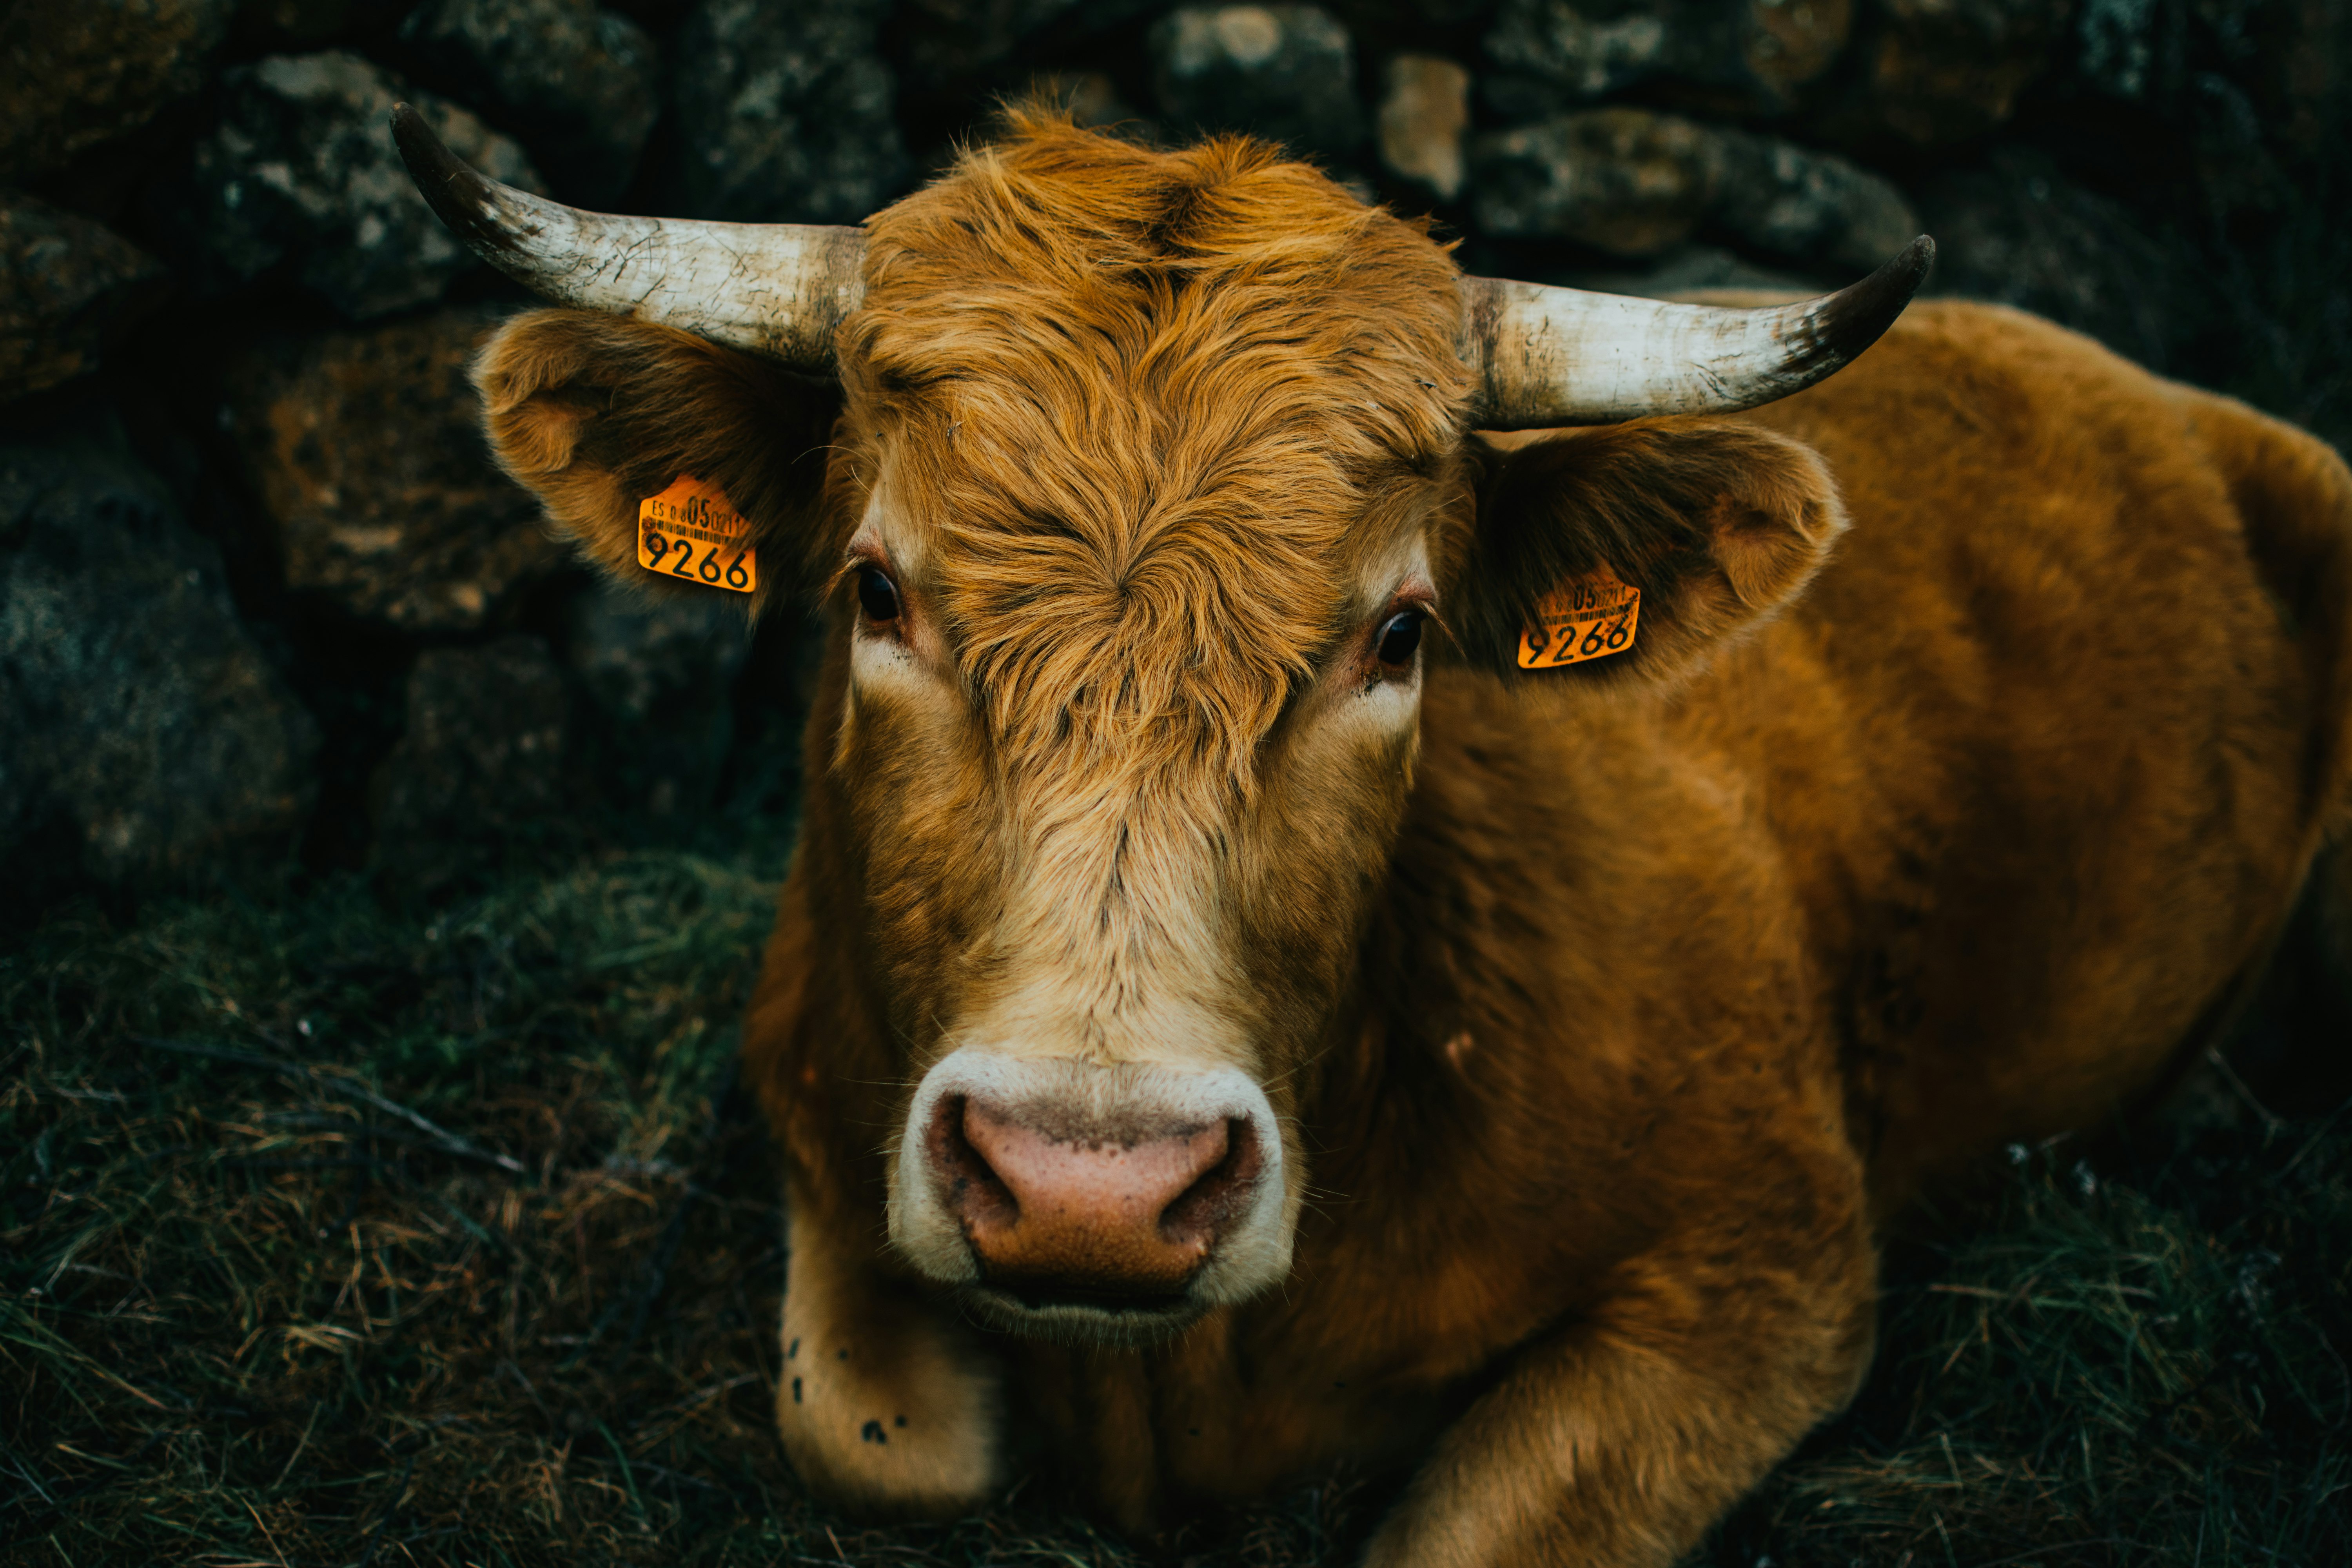 A cow looking at camera